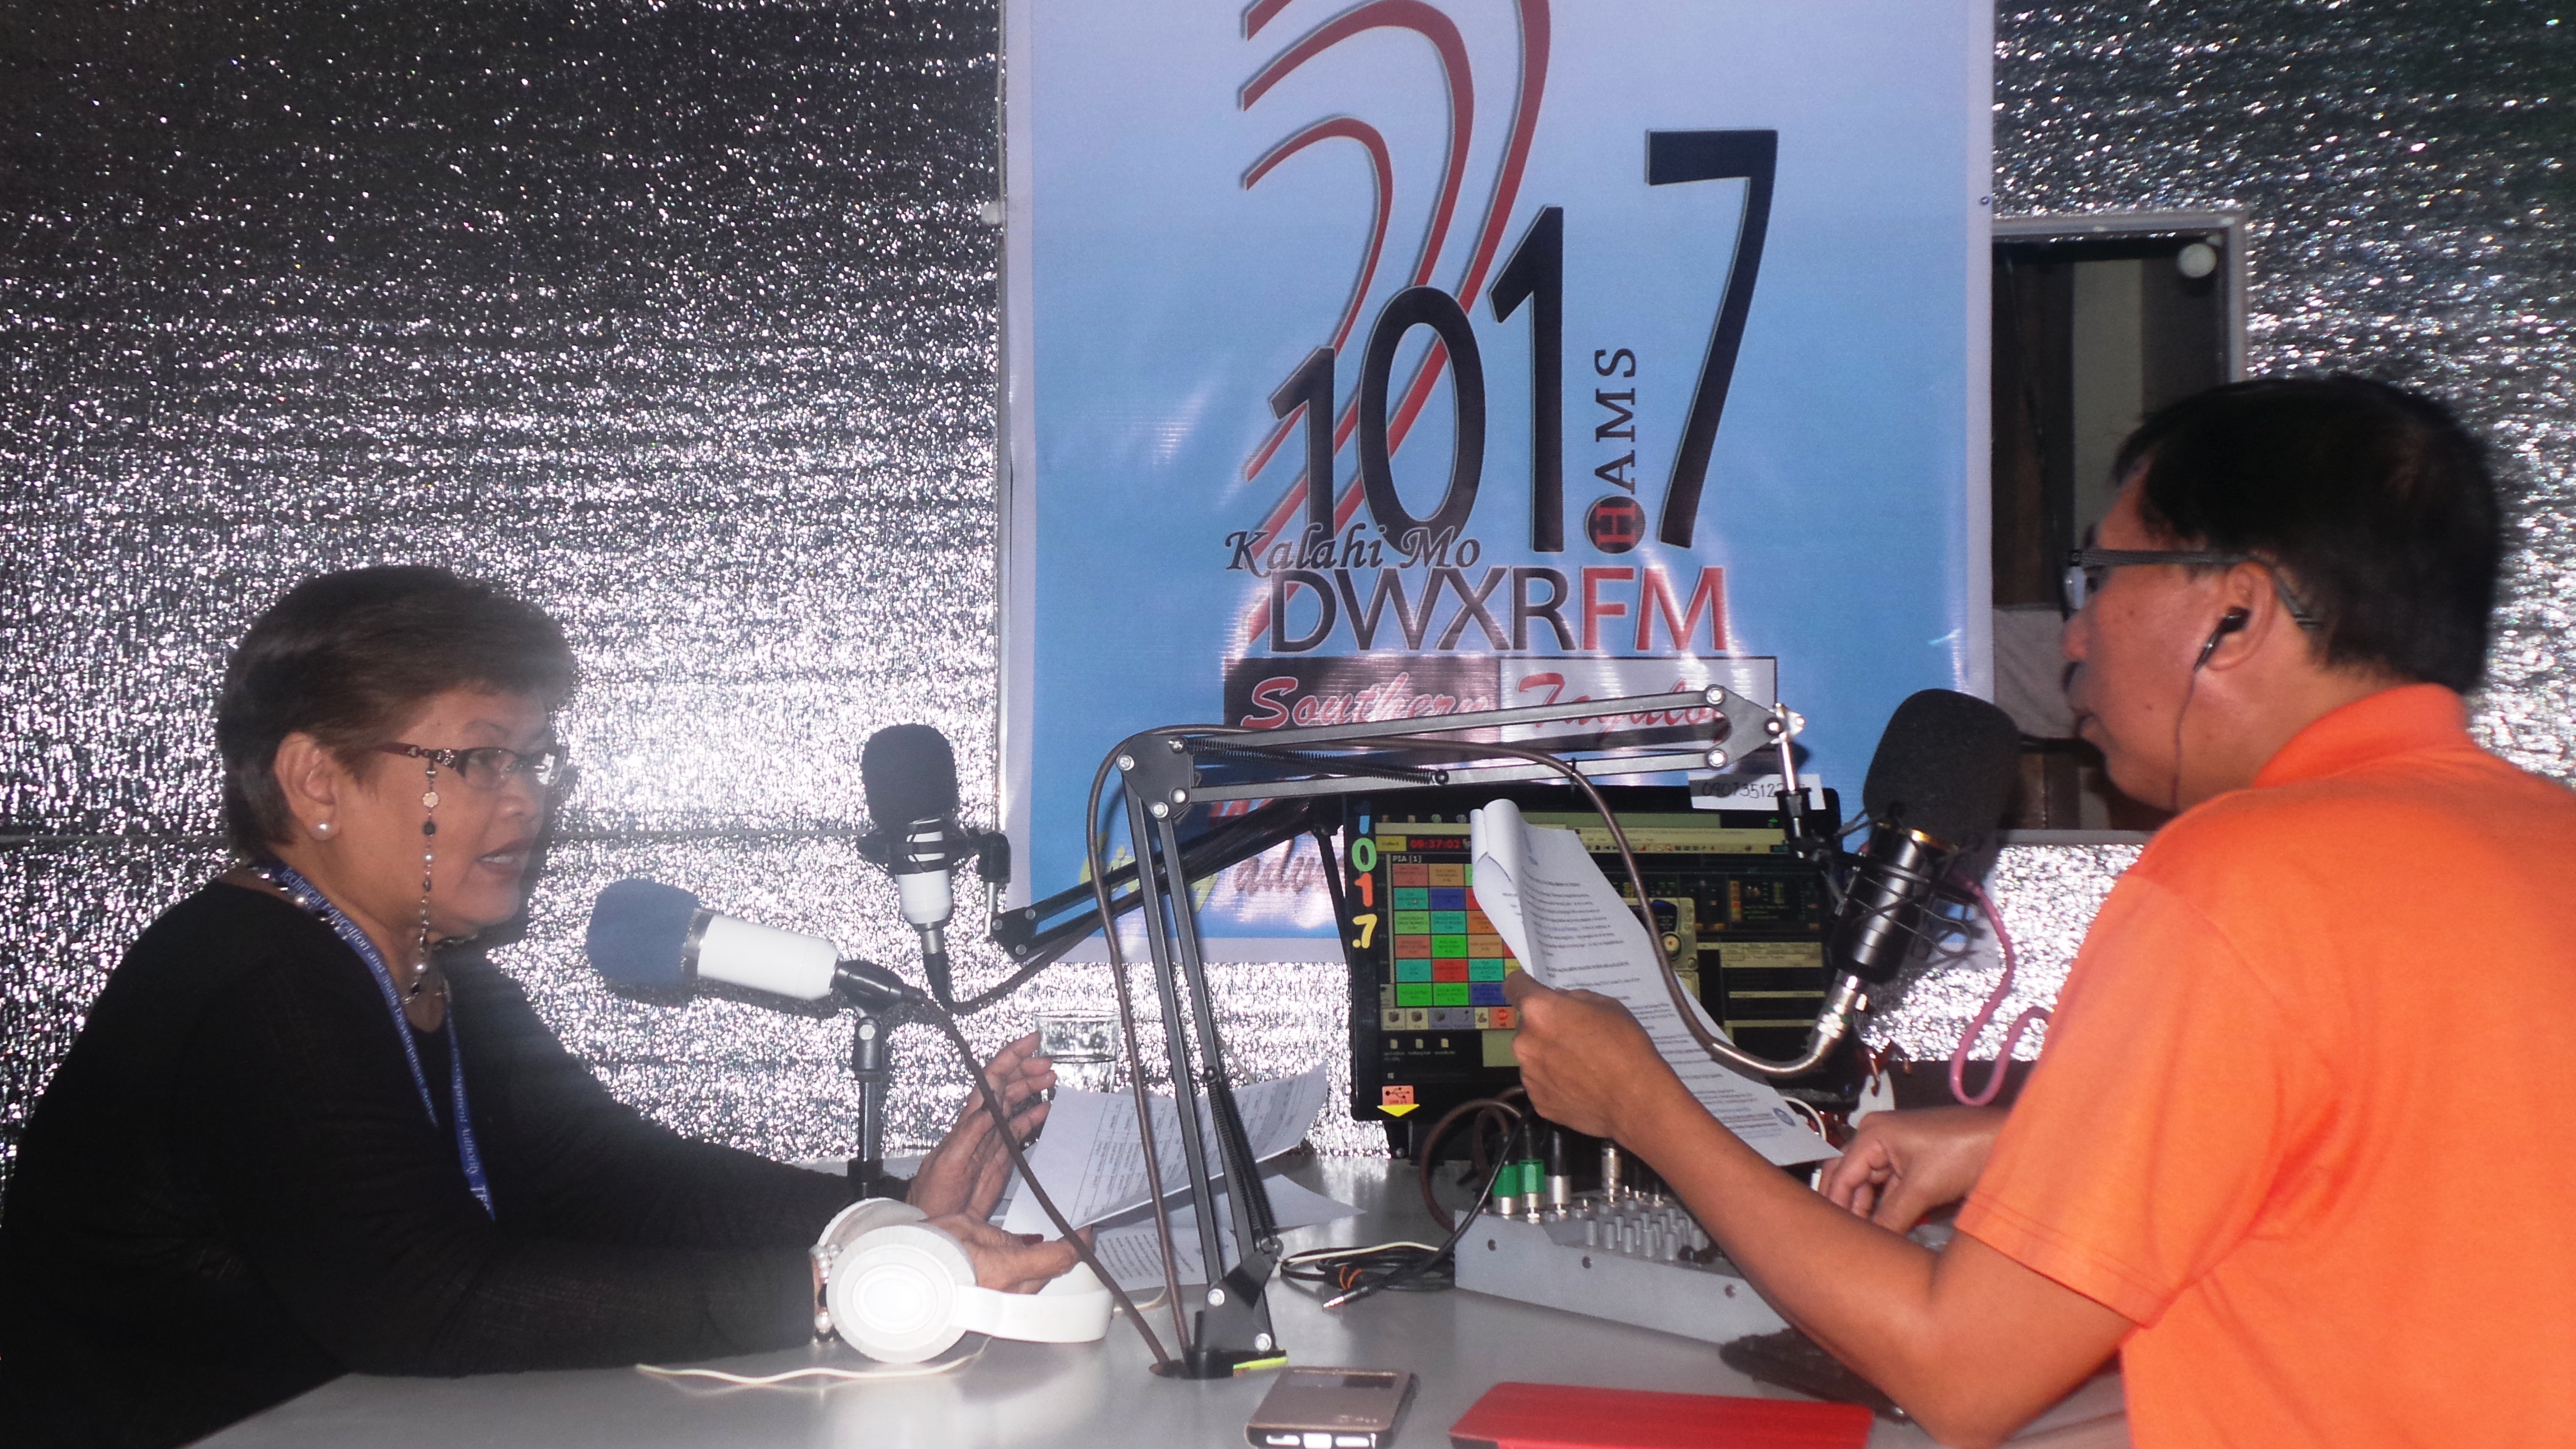 Provincial Director Asuncion Ordona during the DWXR 101.7 FM Radio Interview